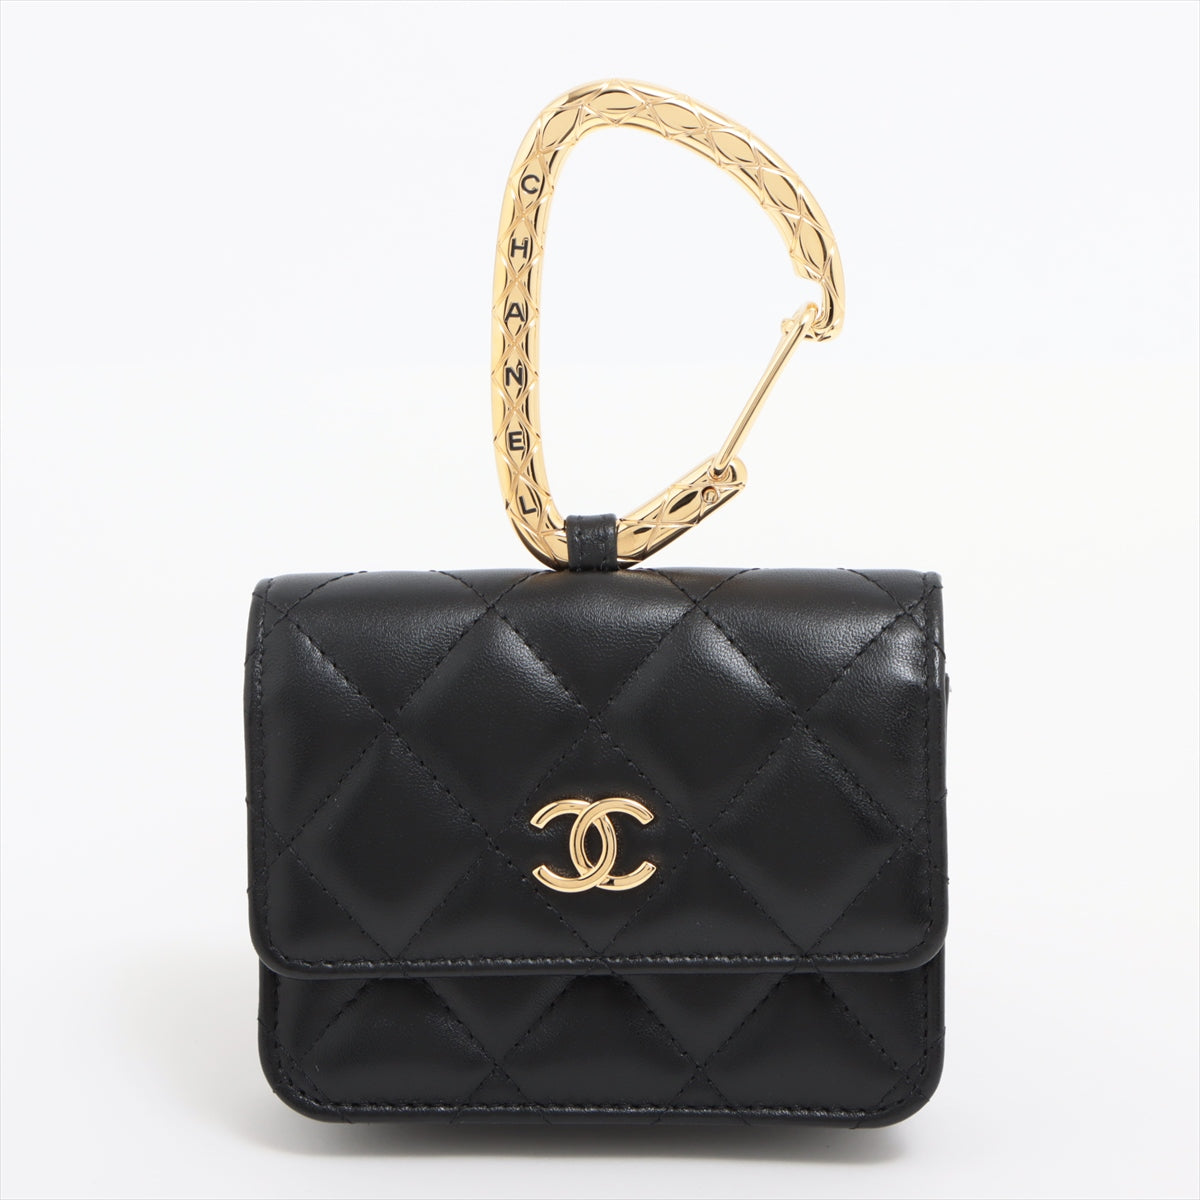 Chanel Jumbo Matelasse Lambskin Card case Black Gold Metal fittings 31st jewel hook